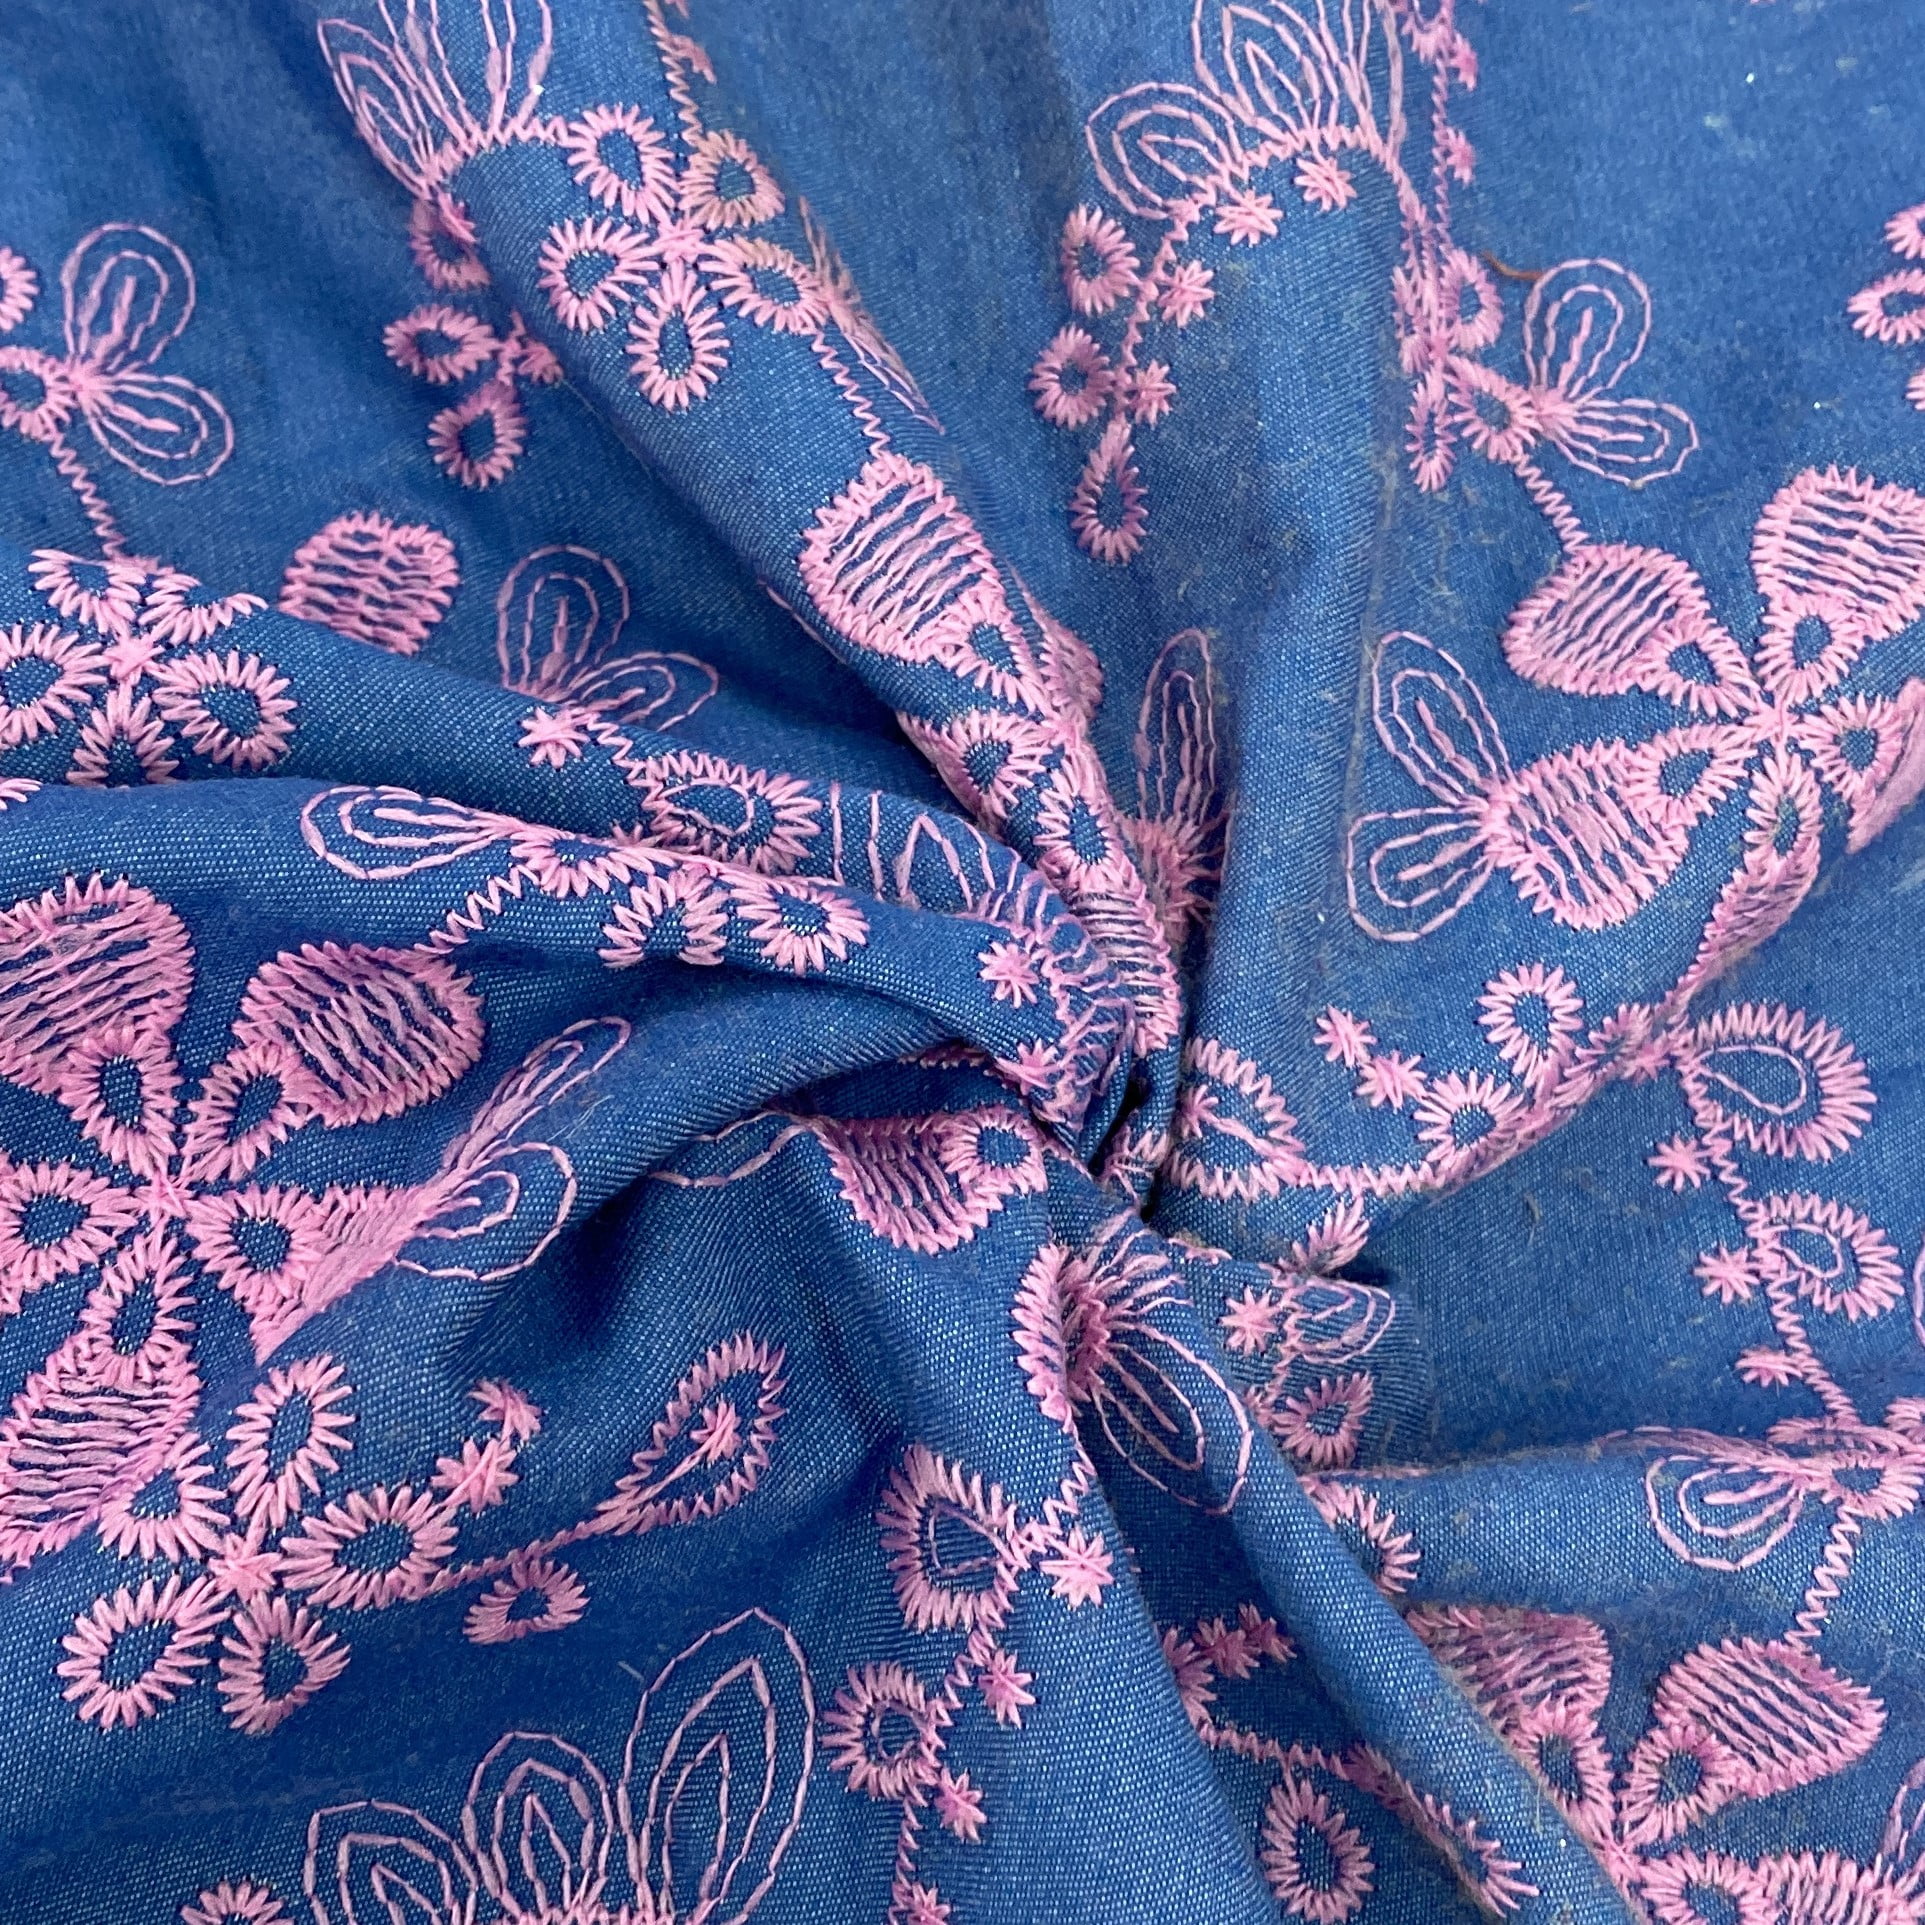 Tecido Mescla Jeans Bordado Azul Floral Rosa - Empório dos Tecidos 